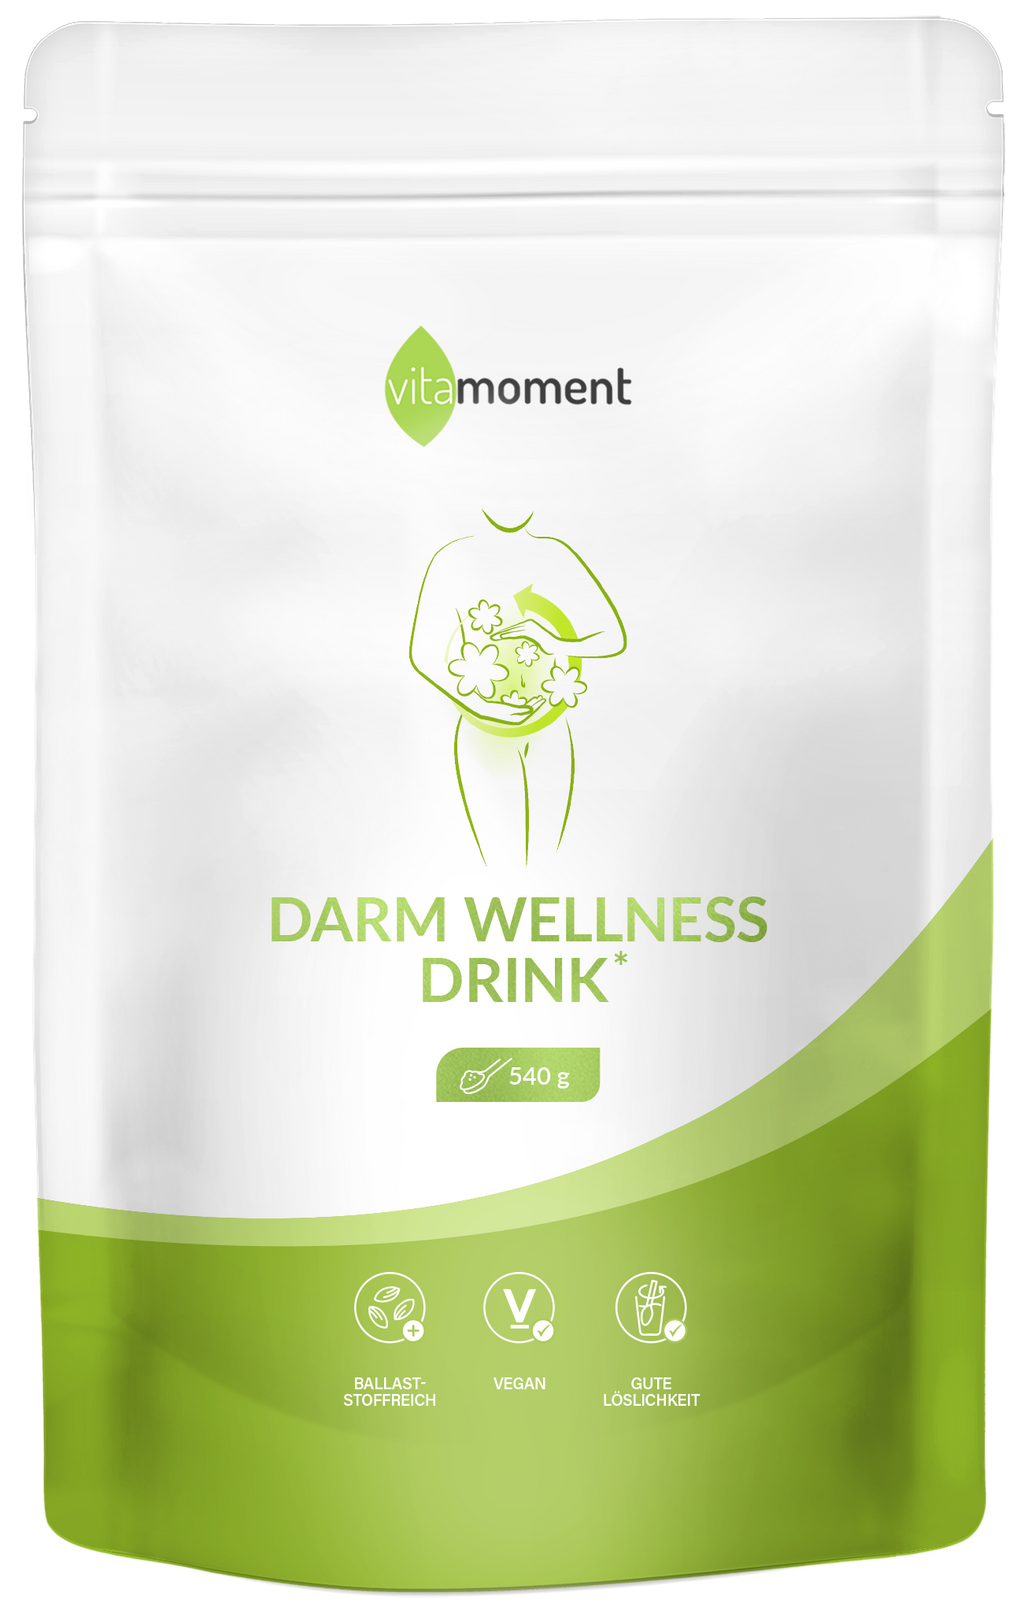 Darm-Wellness-Drink - VitaMoment Produkt